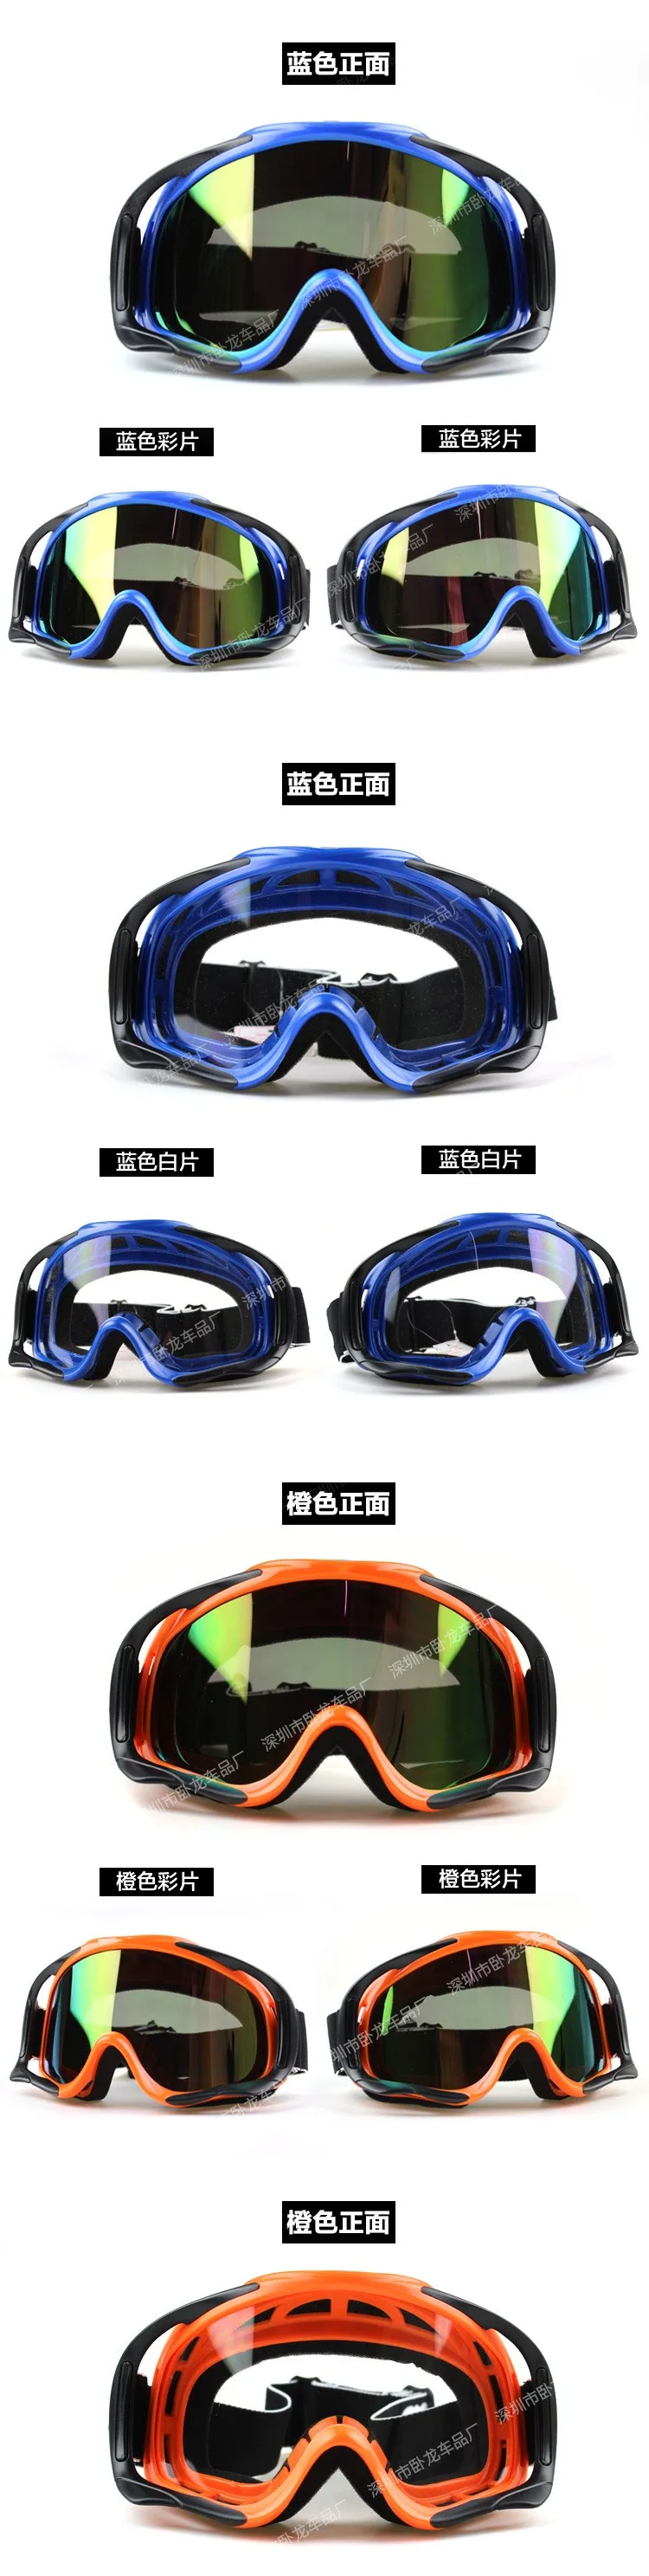 YUANMINGSHI мотокросса шлем очки для мотокросса очки для катания на лыжах очки для катания на коньках